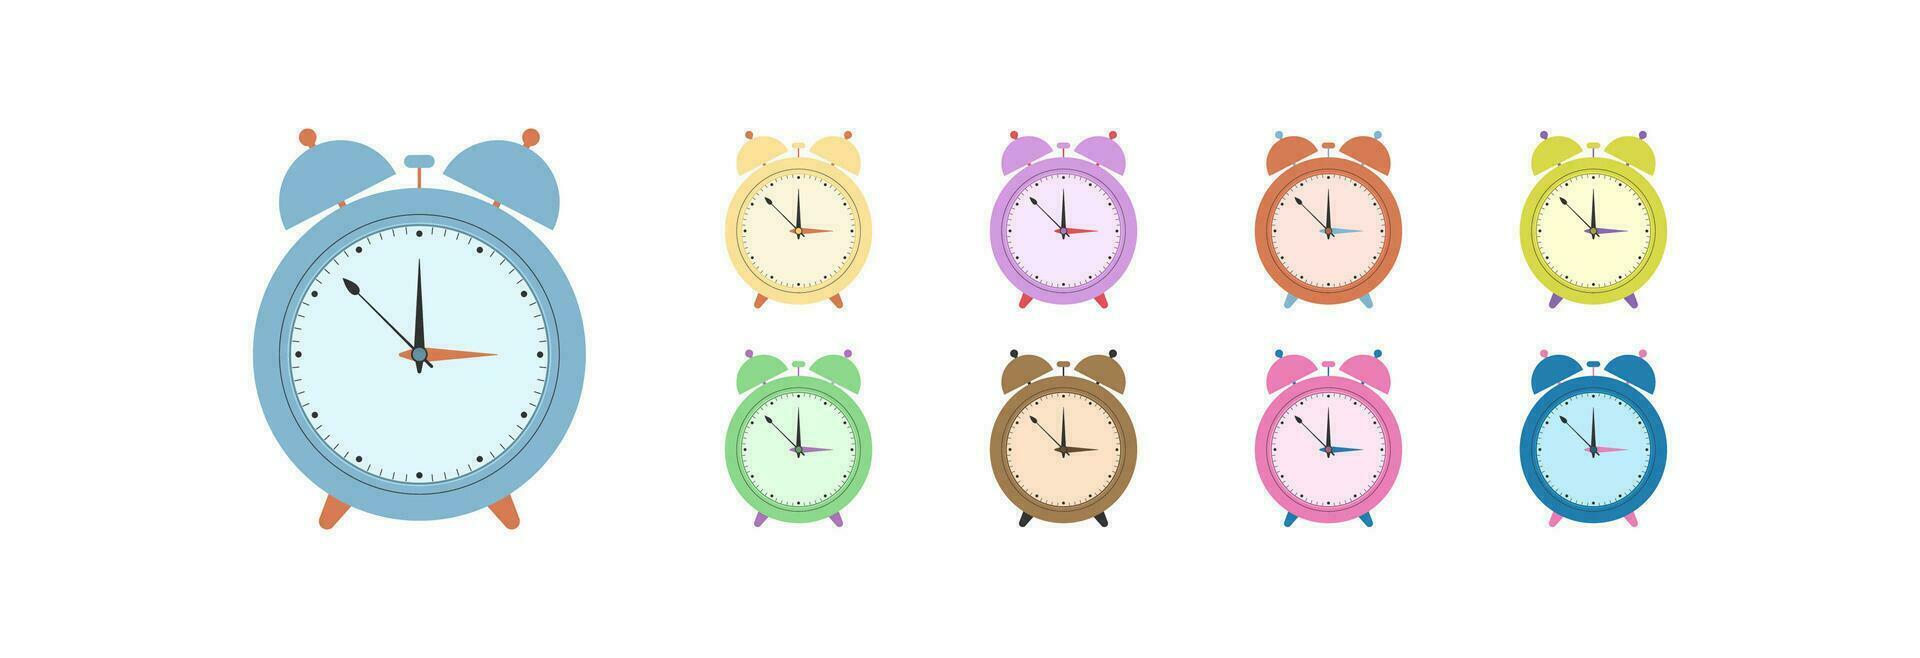 A set of different alarm clocks. vector